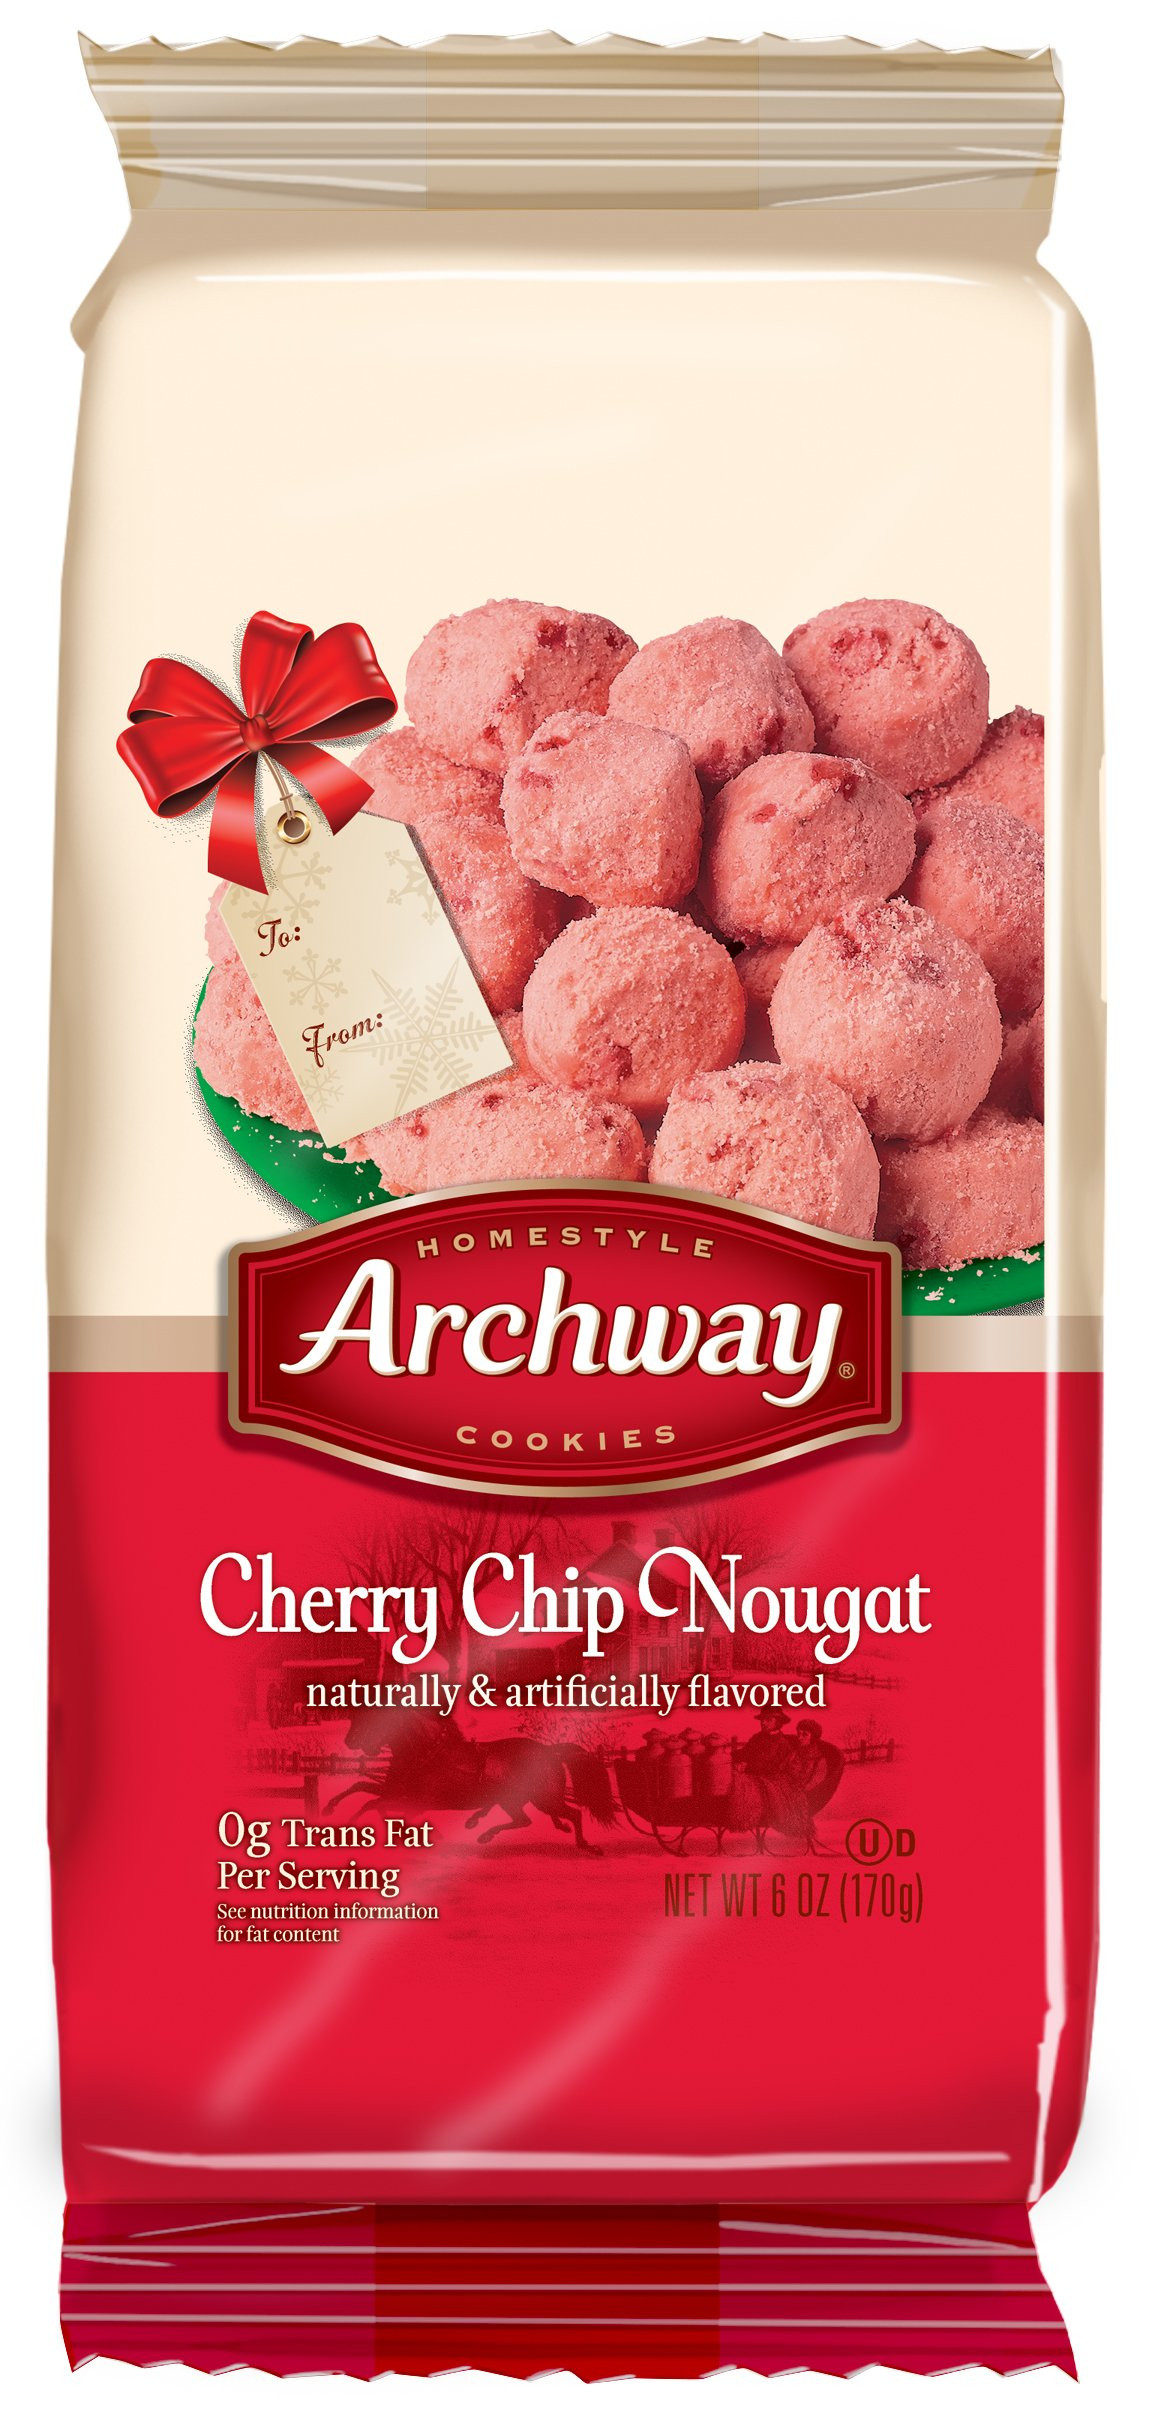 Archway Christmas Cookies
 Archway Cookies Wedding Cake Cookies 6 Ounce Amazon